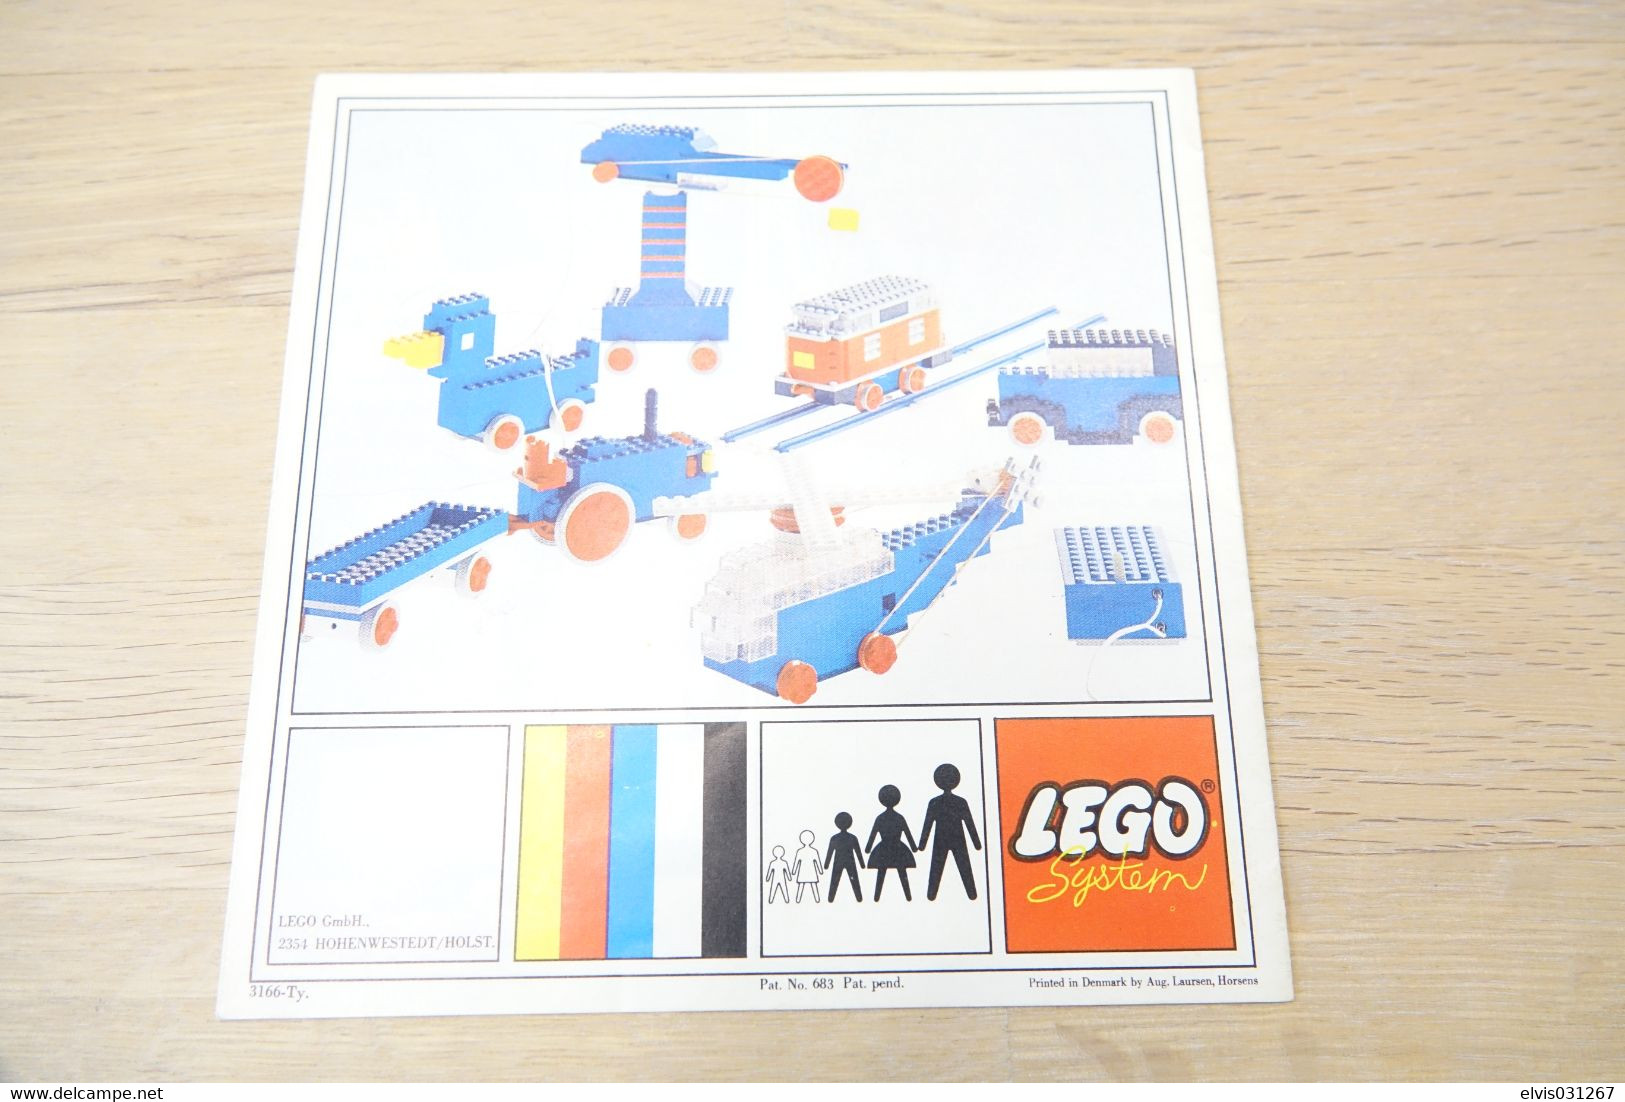 LEGO - Information Book 1966 Mit Dem Lego-Motor Bauen (3166-Ty) - Original Vintage Lego - 1966 - Catalogi